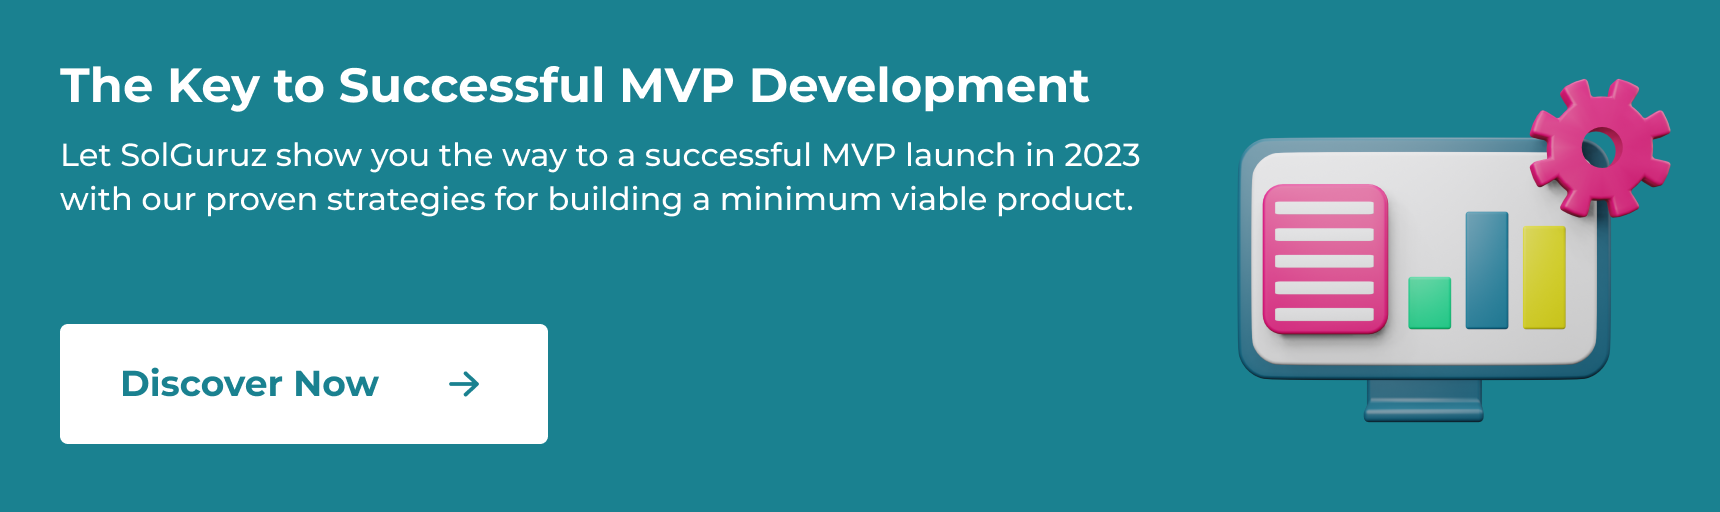 The Key to Successful MVP Development